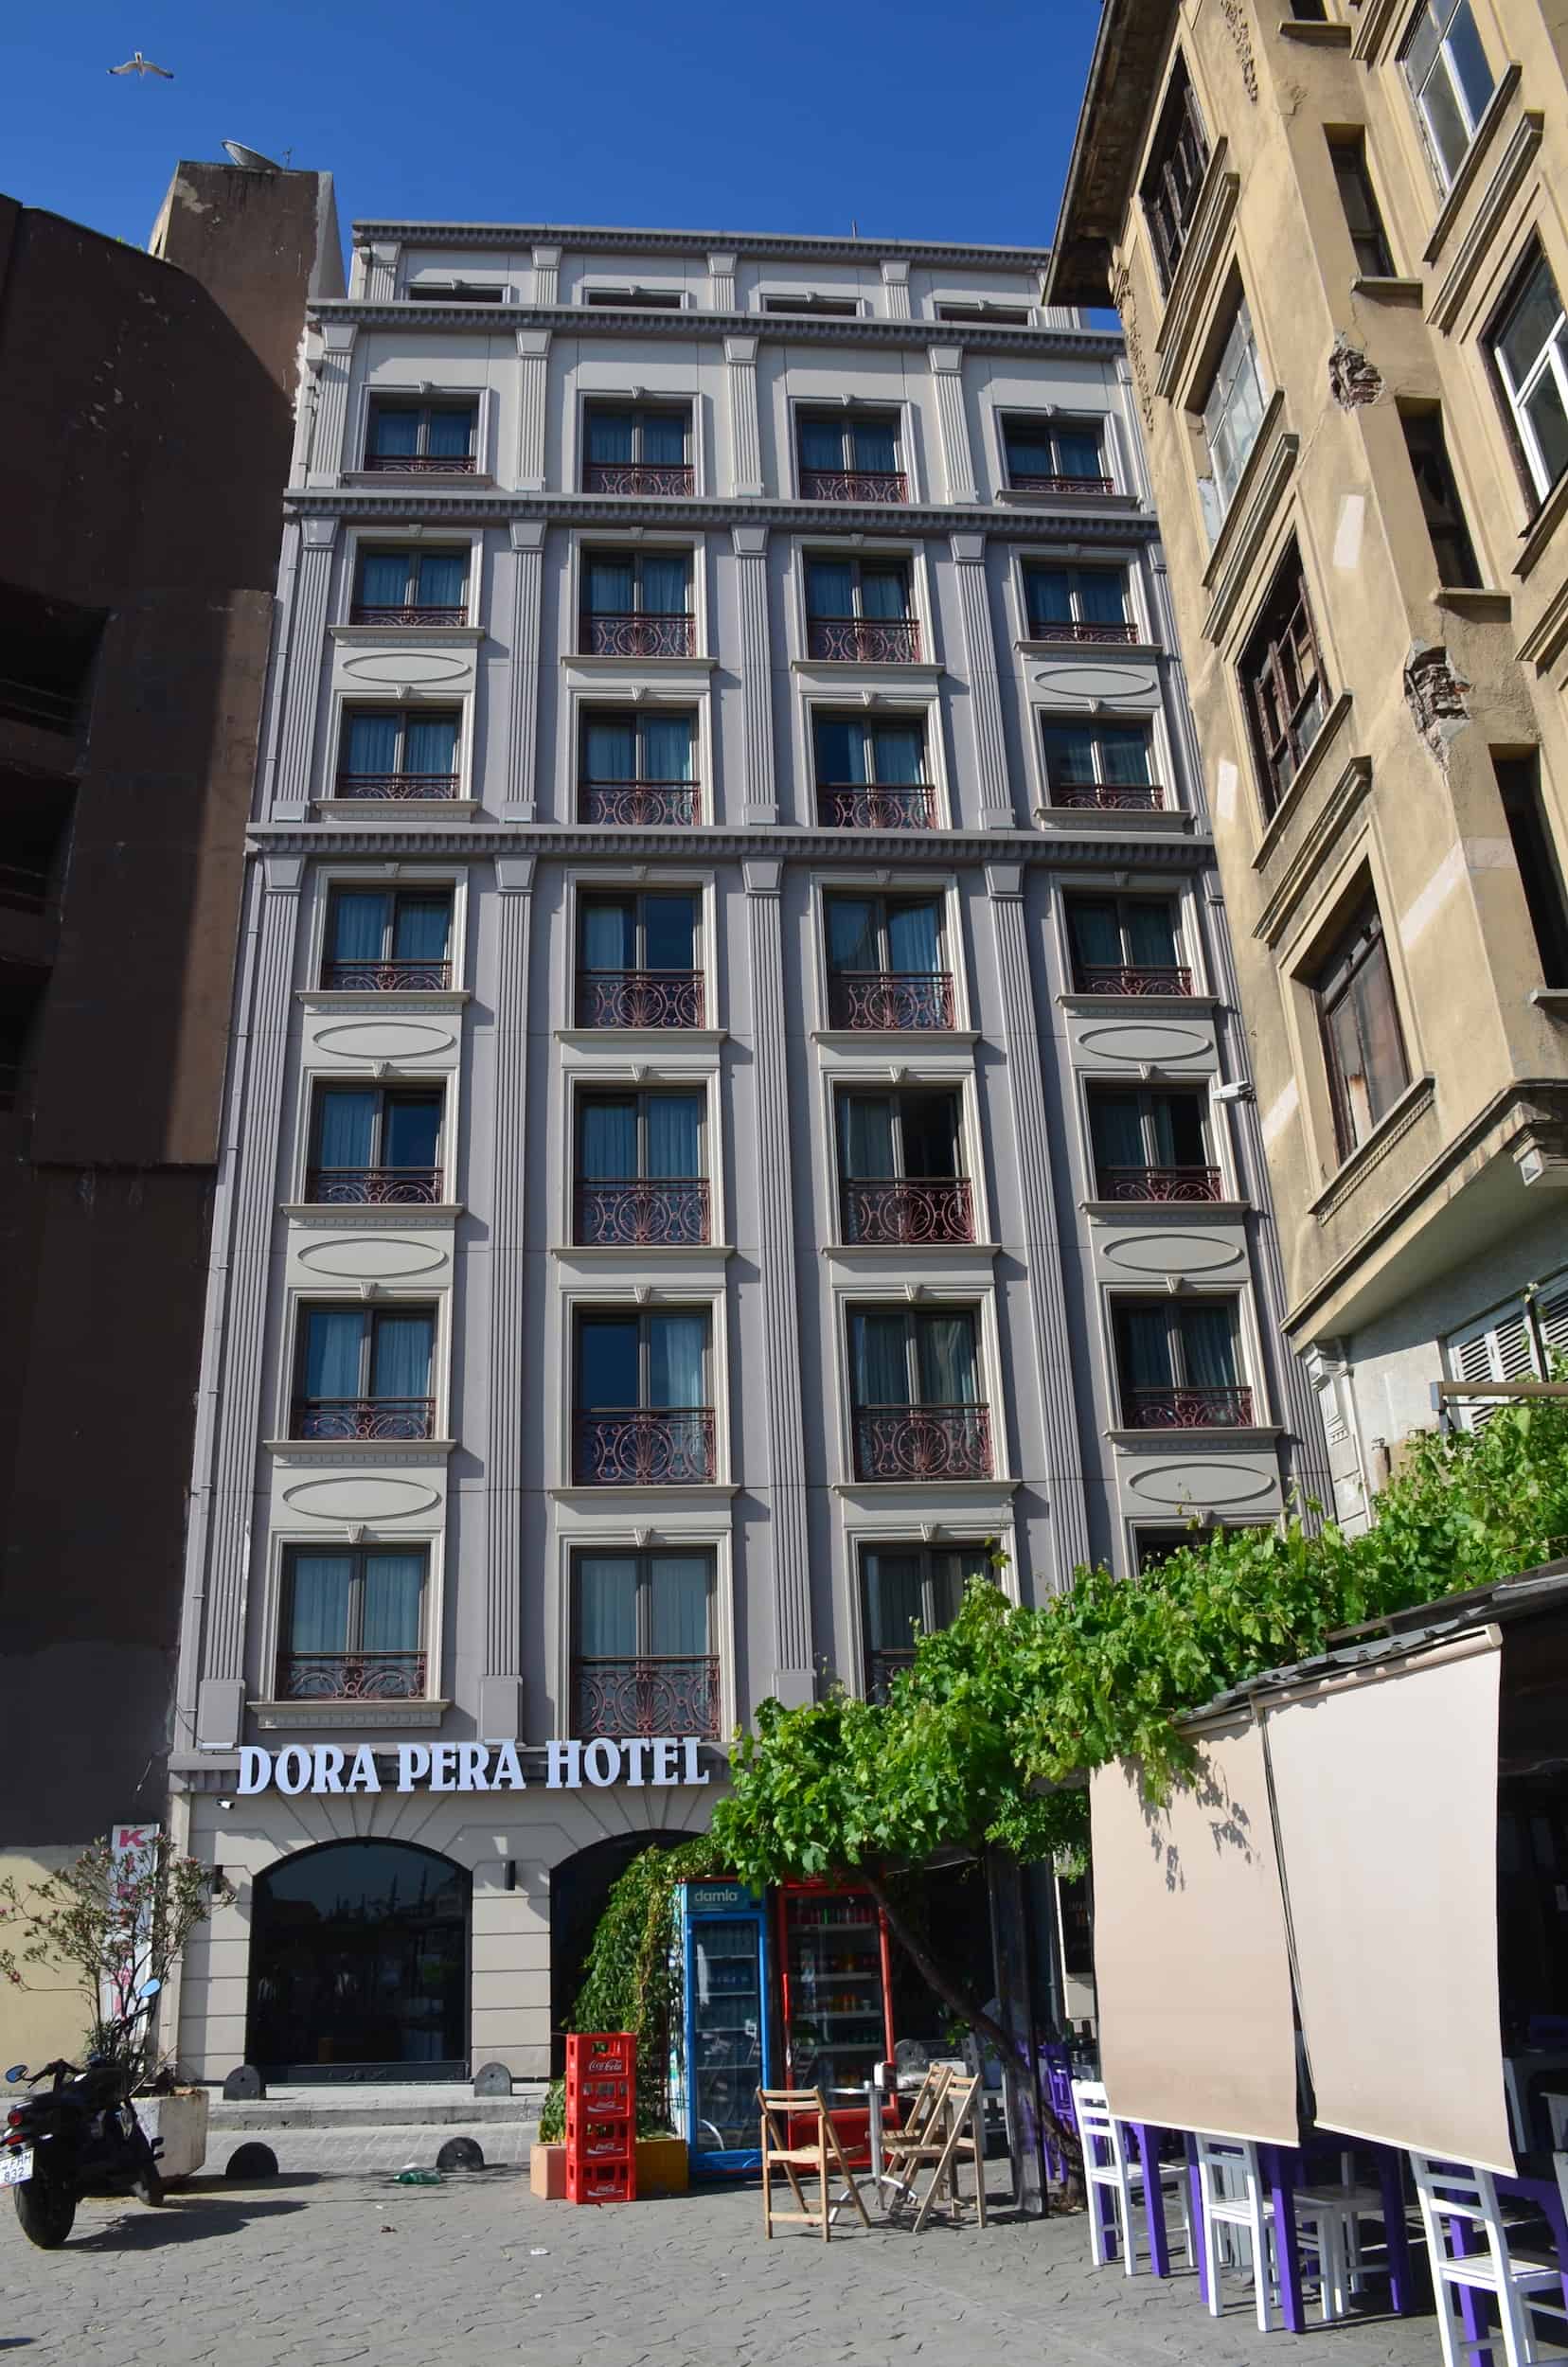 Dora Pera Hotel in Istanbul, Turkey